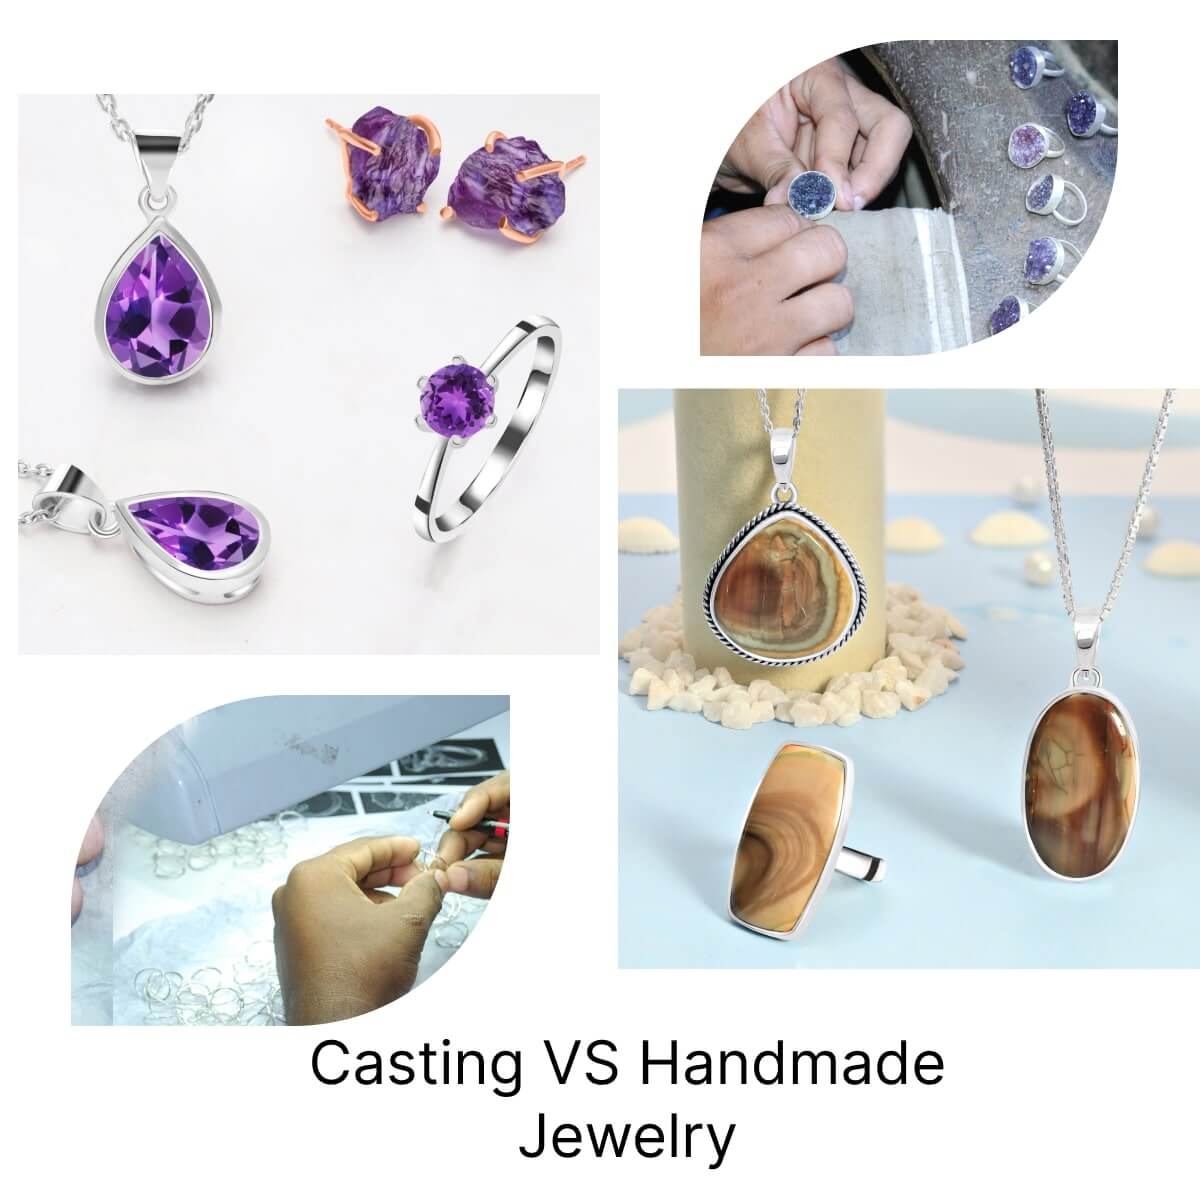 How to Compare Casting Jewellery VS Handmade Jewelry? 